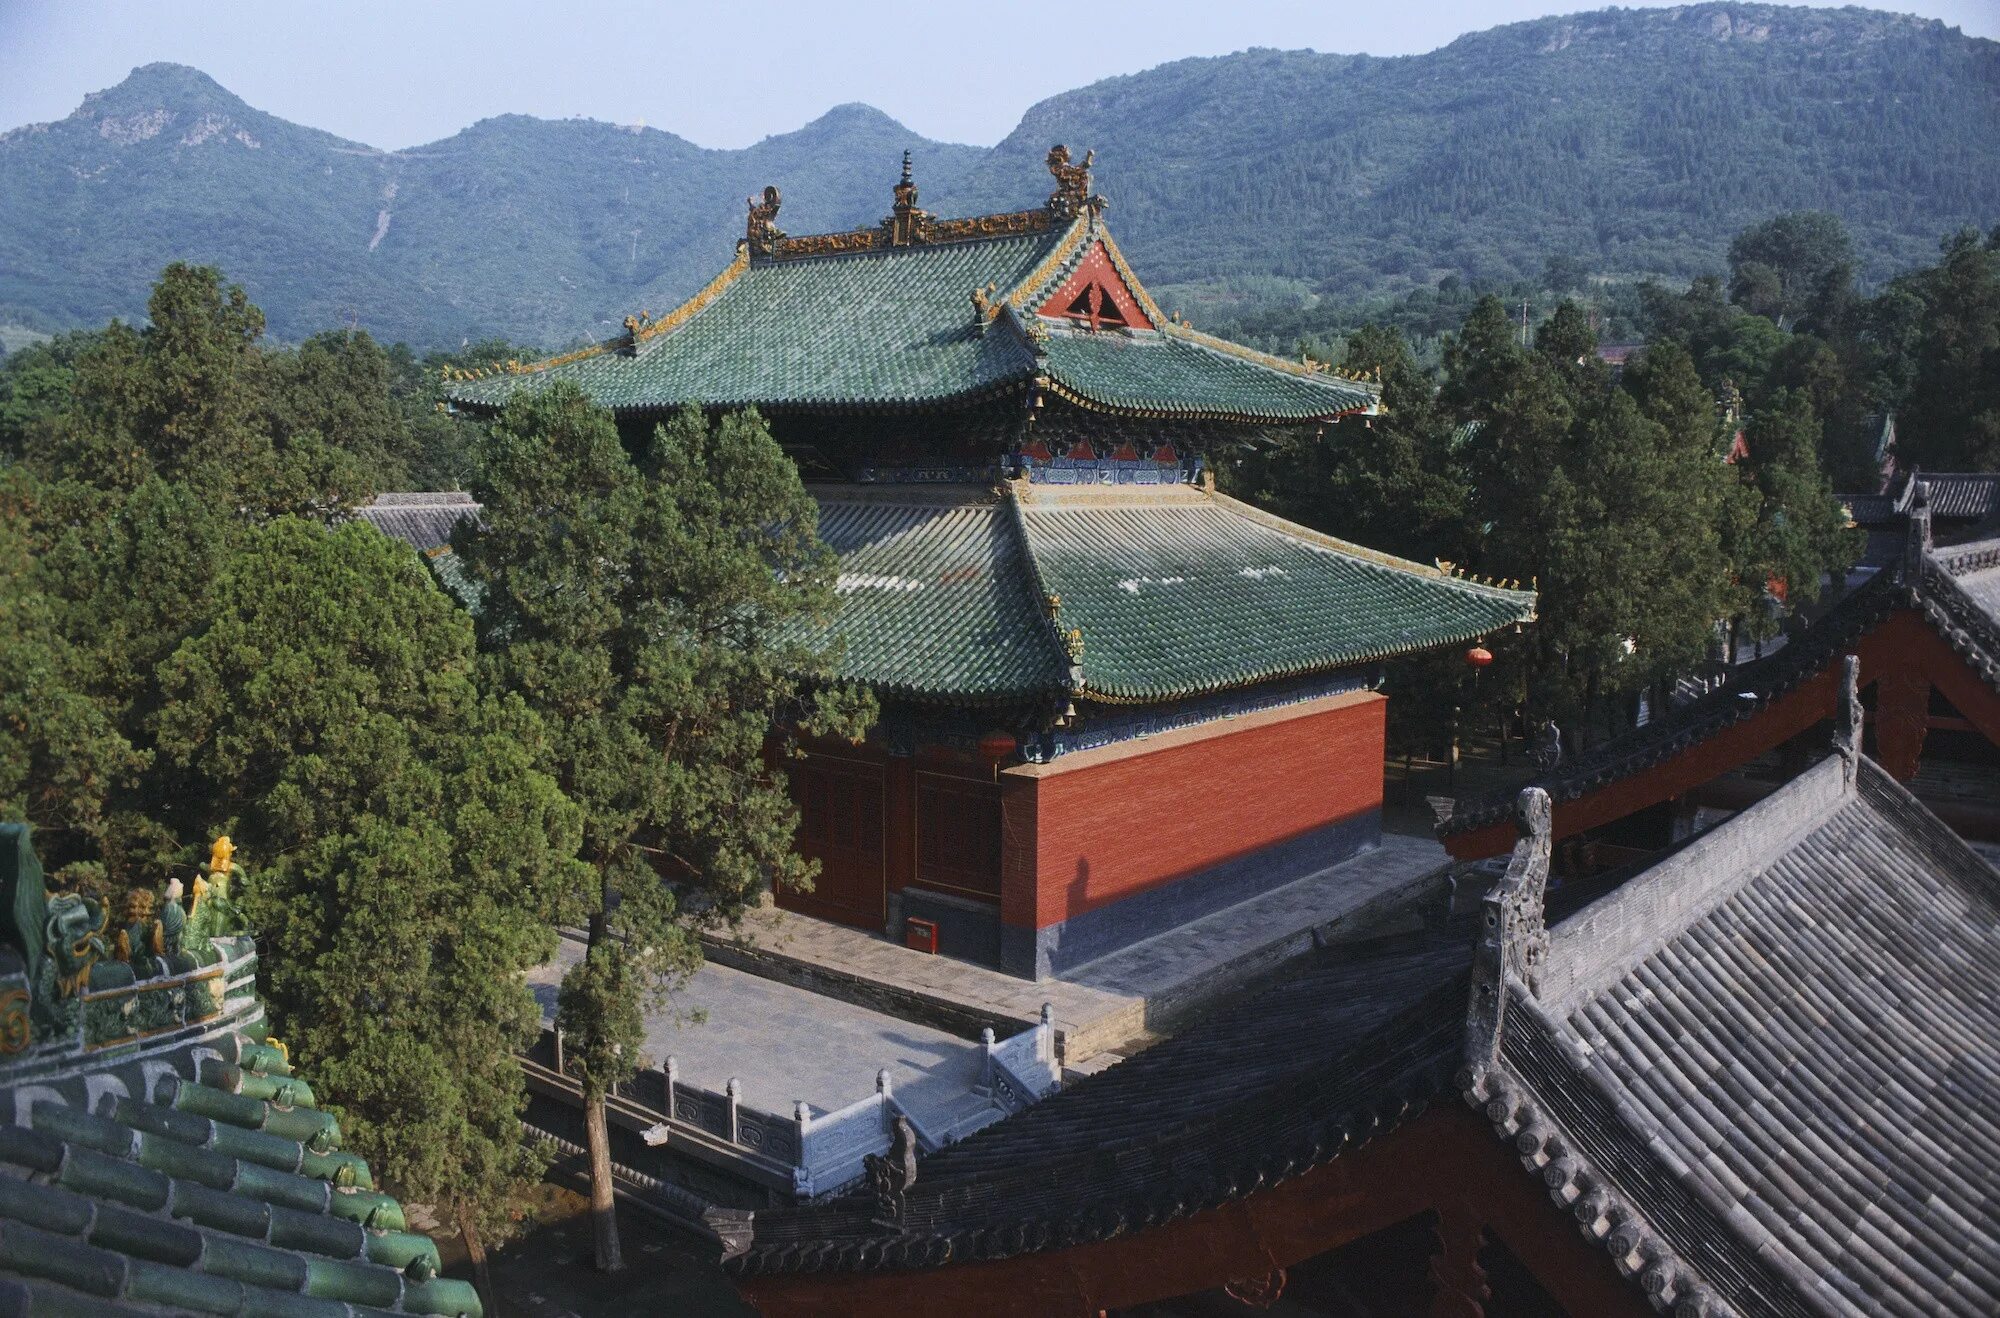 Shaolin temple. Монастырь Шаолинь Хэнань. Монастырь Шаолинь Китай. Храм Шаолинь Хэнань монастырь Шаолинь Китай. Буддийский храм Шаолинь.